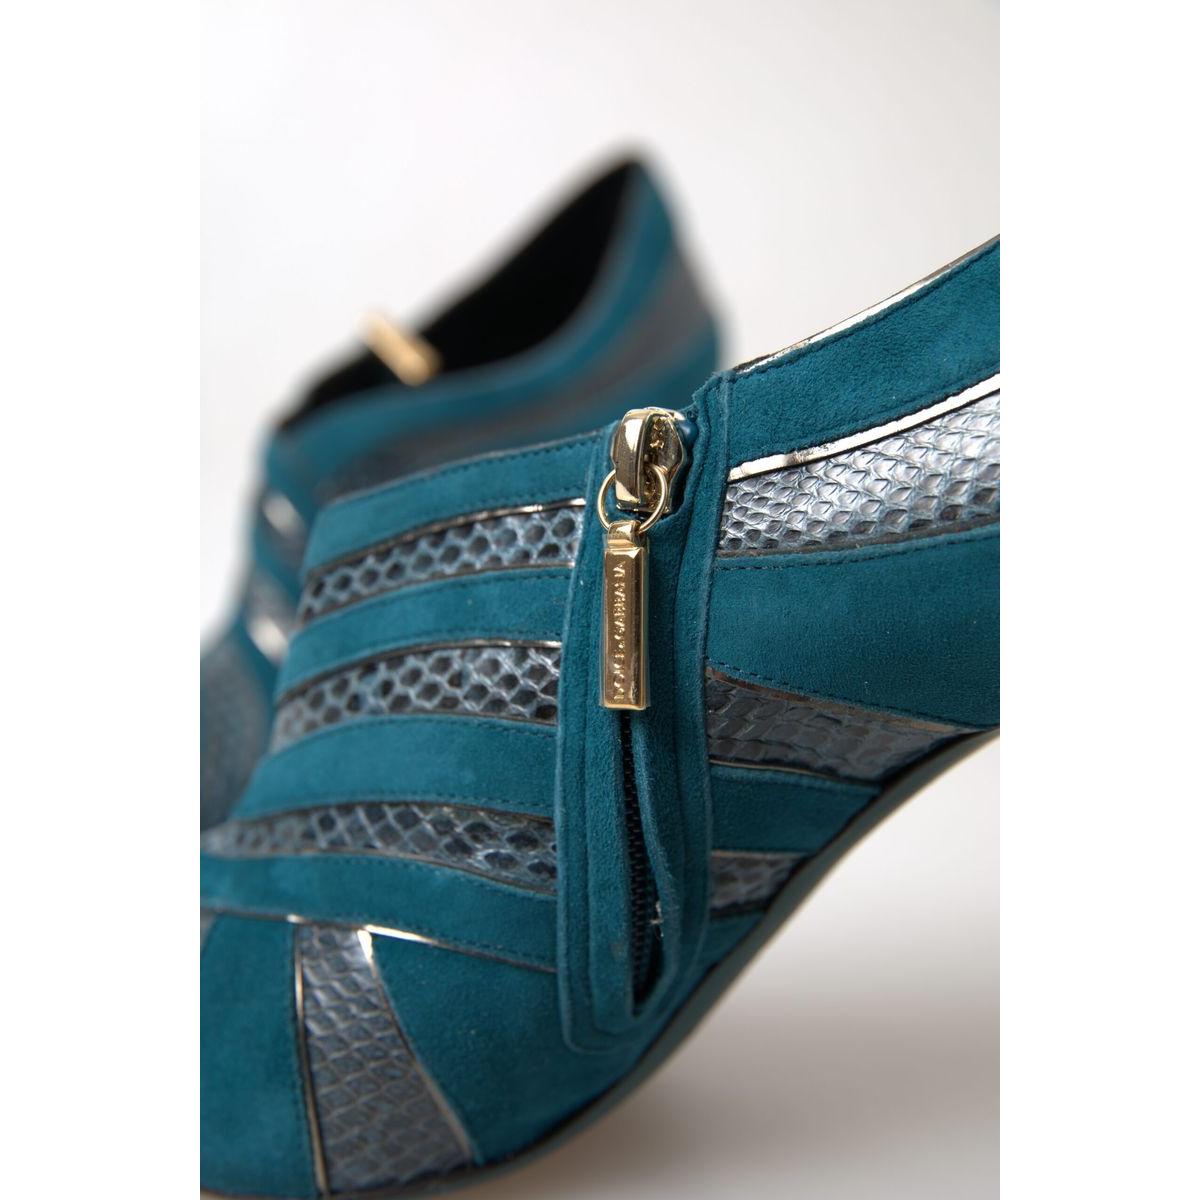 Dolce & Gabbana Chic Blue Peep Toe Stiletto Ankle Booties blue-teal-snakeskin-peep-toe-ankle-booties-shoes